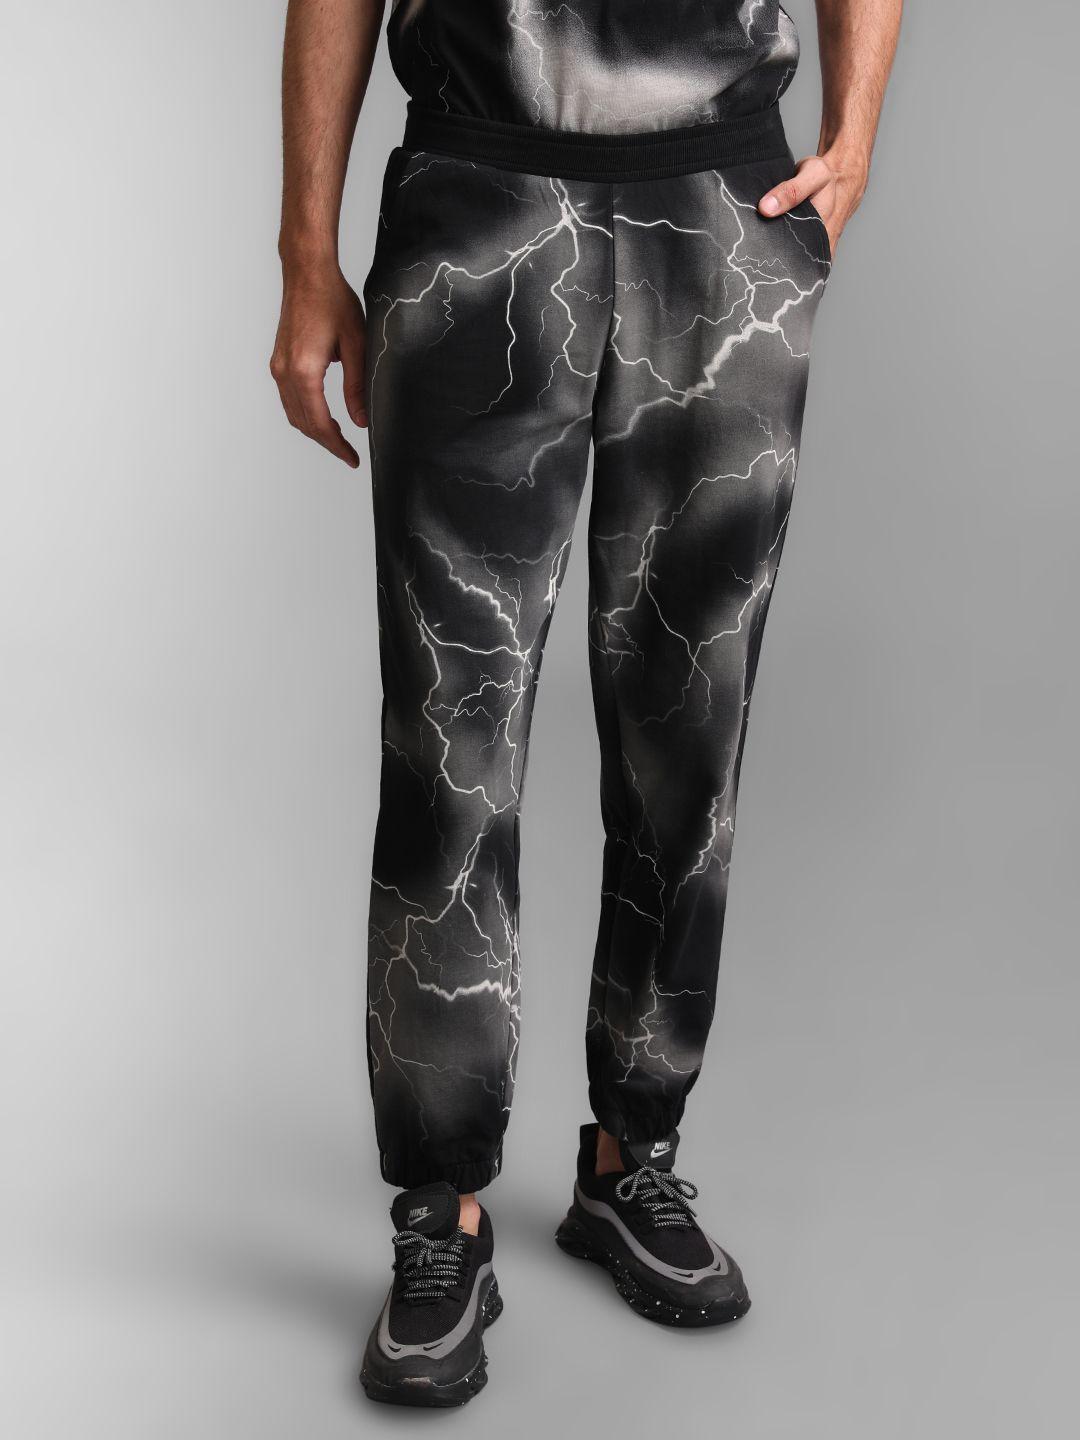 kz07 by kazo men lightning printed high-rise cotton joggers trouser